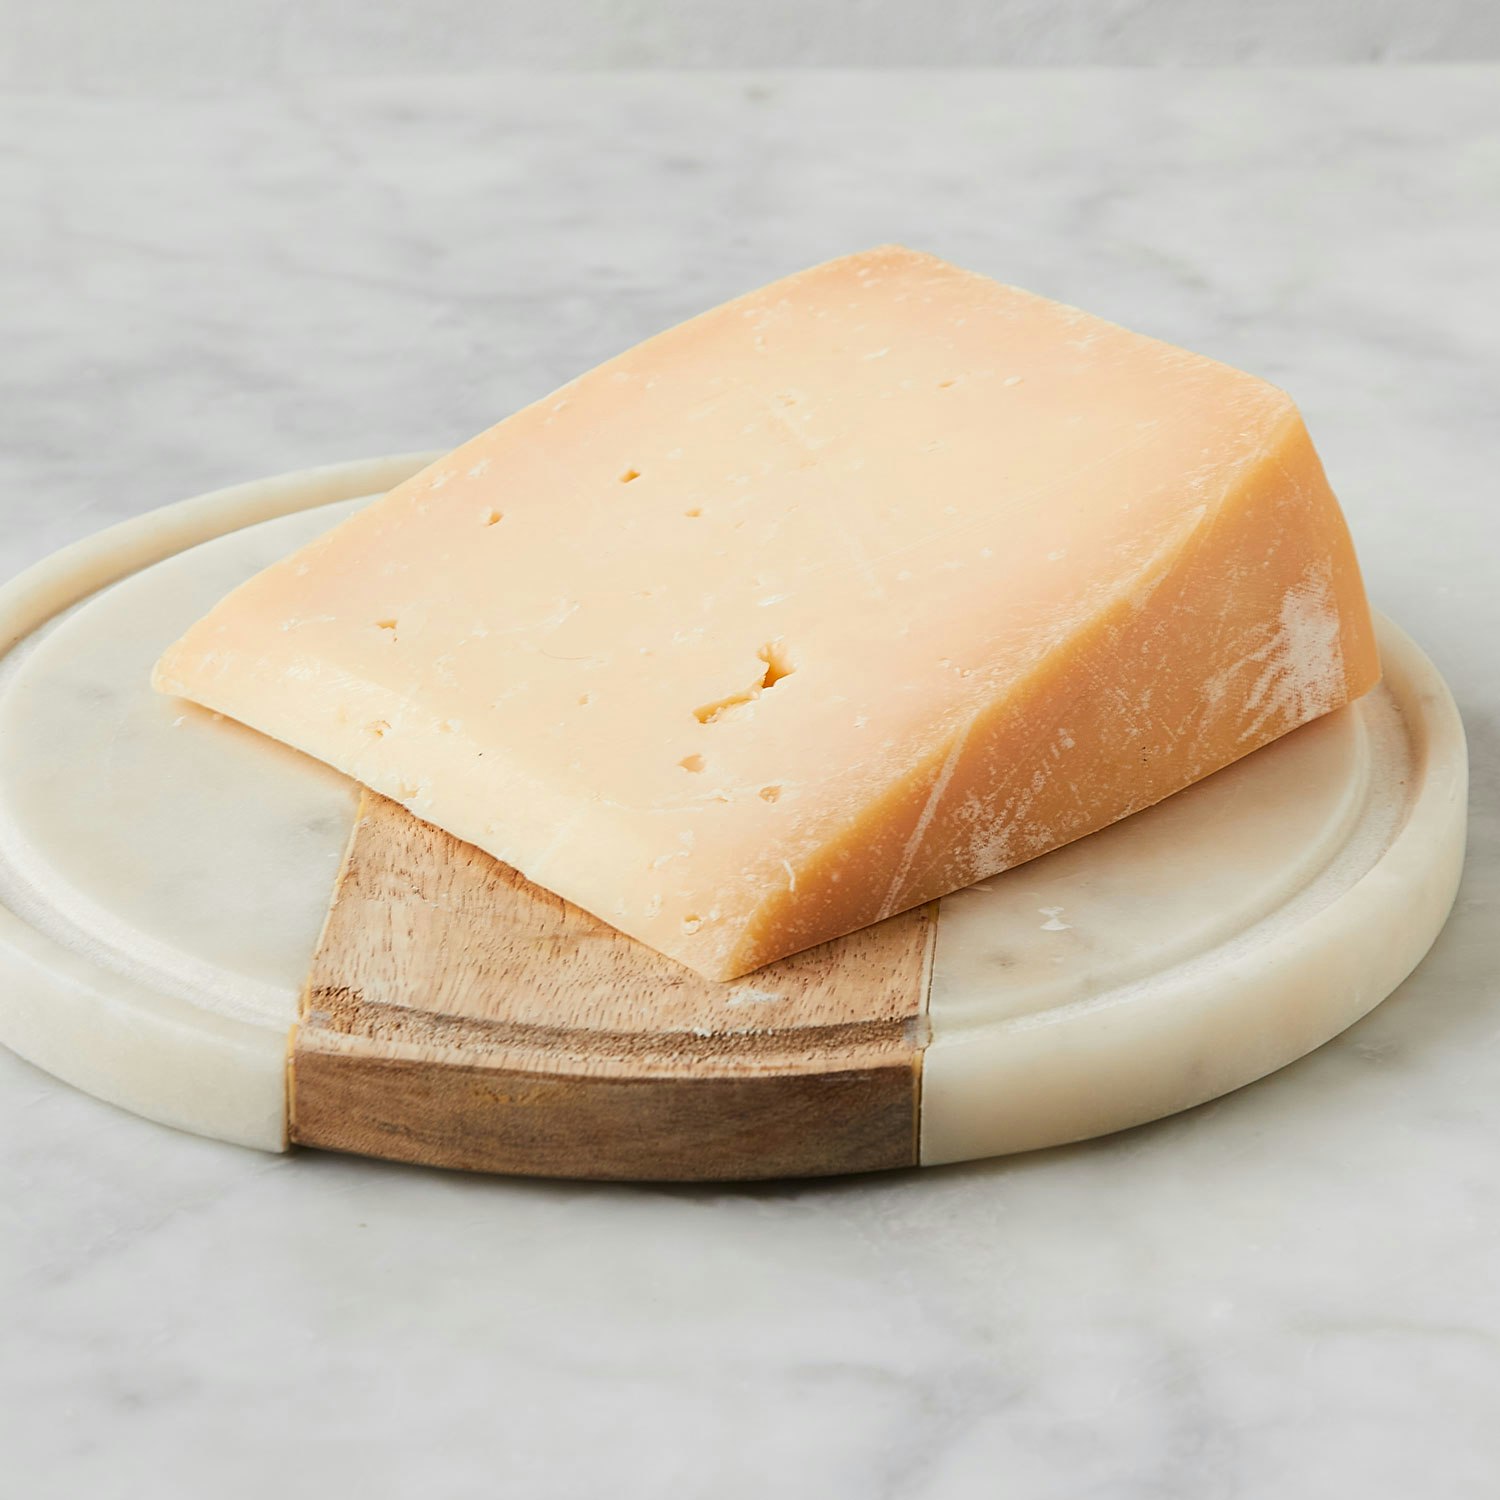 sartori sarvecchio cheese